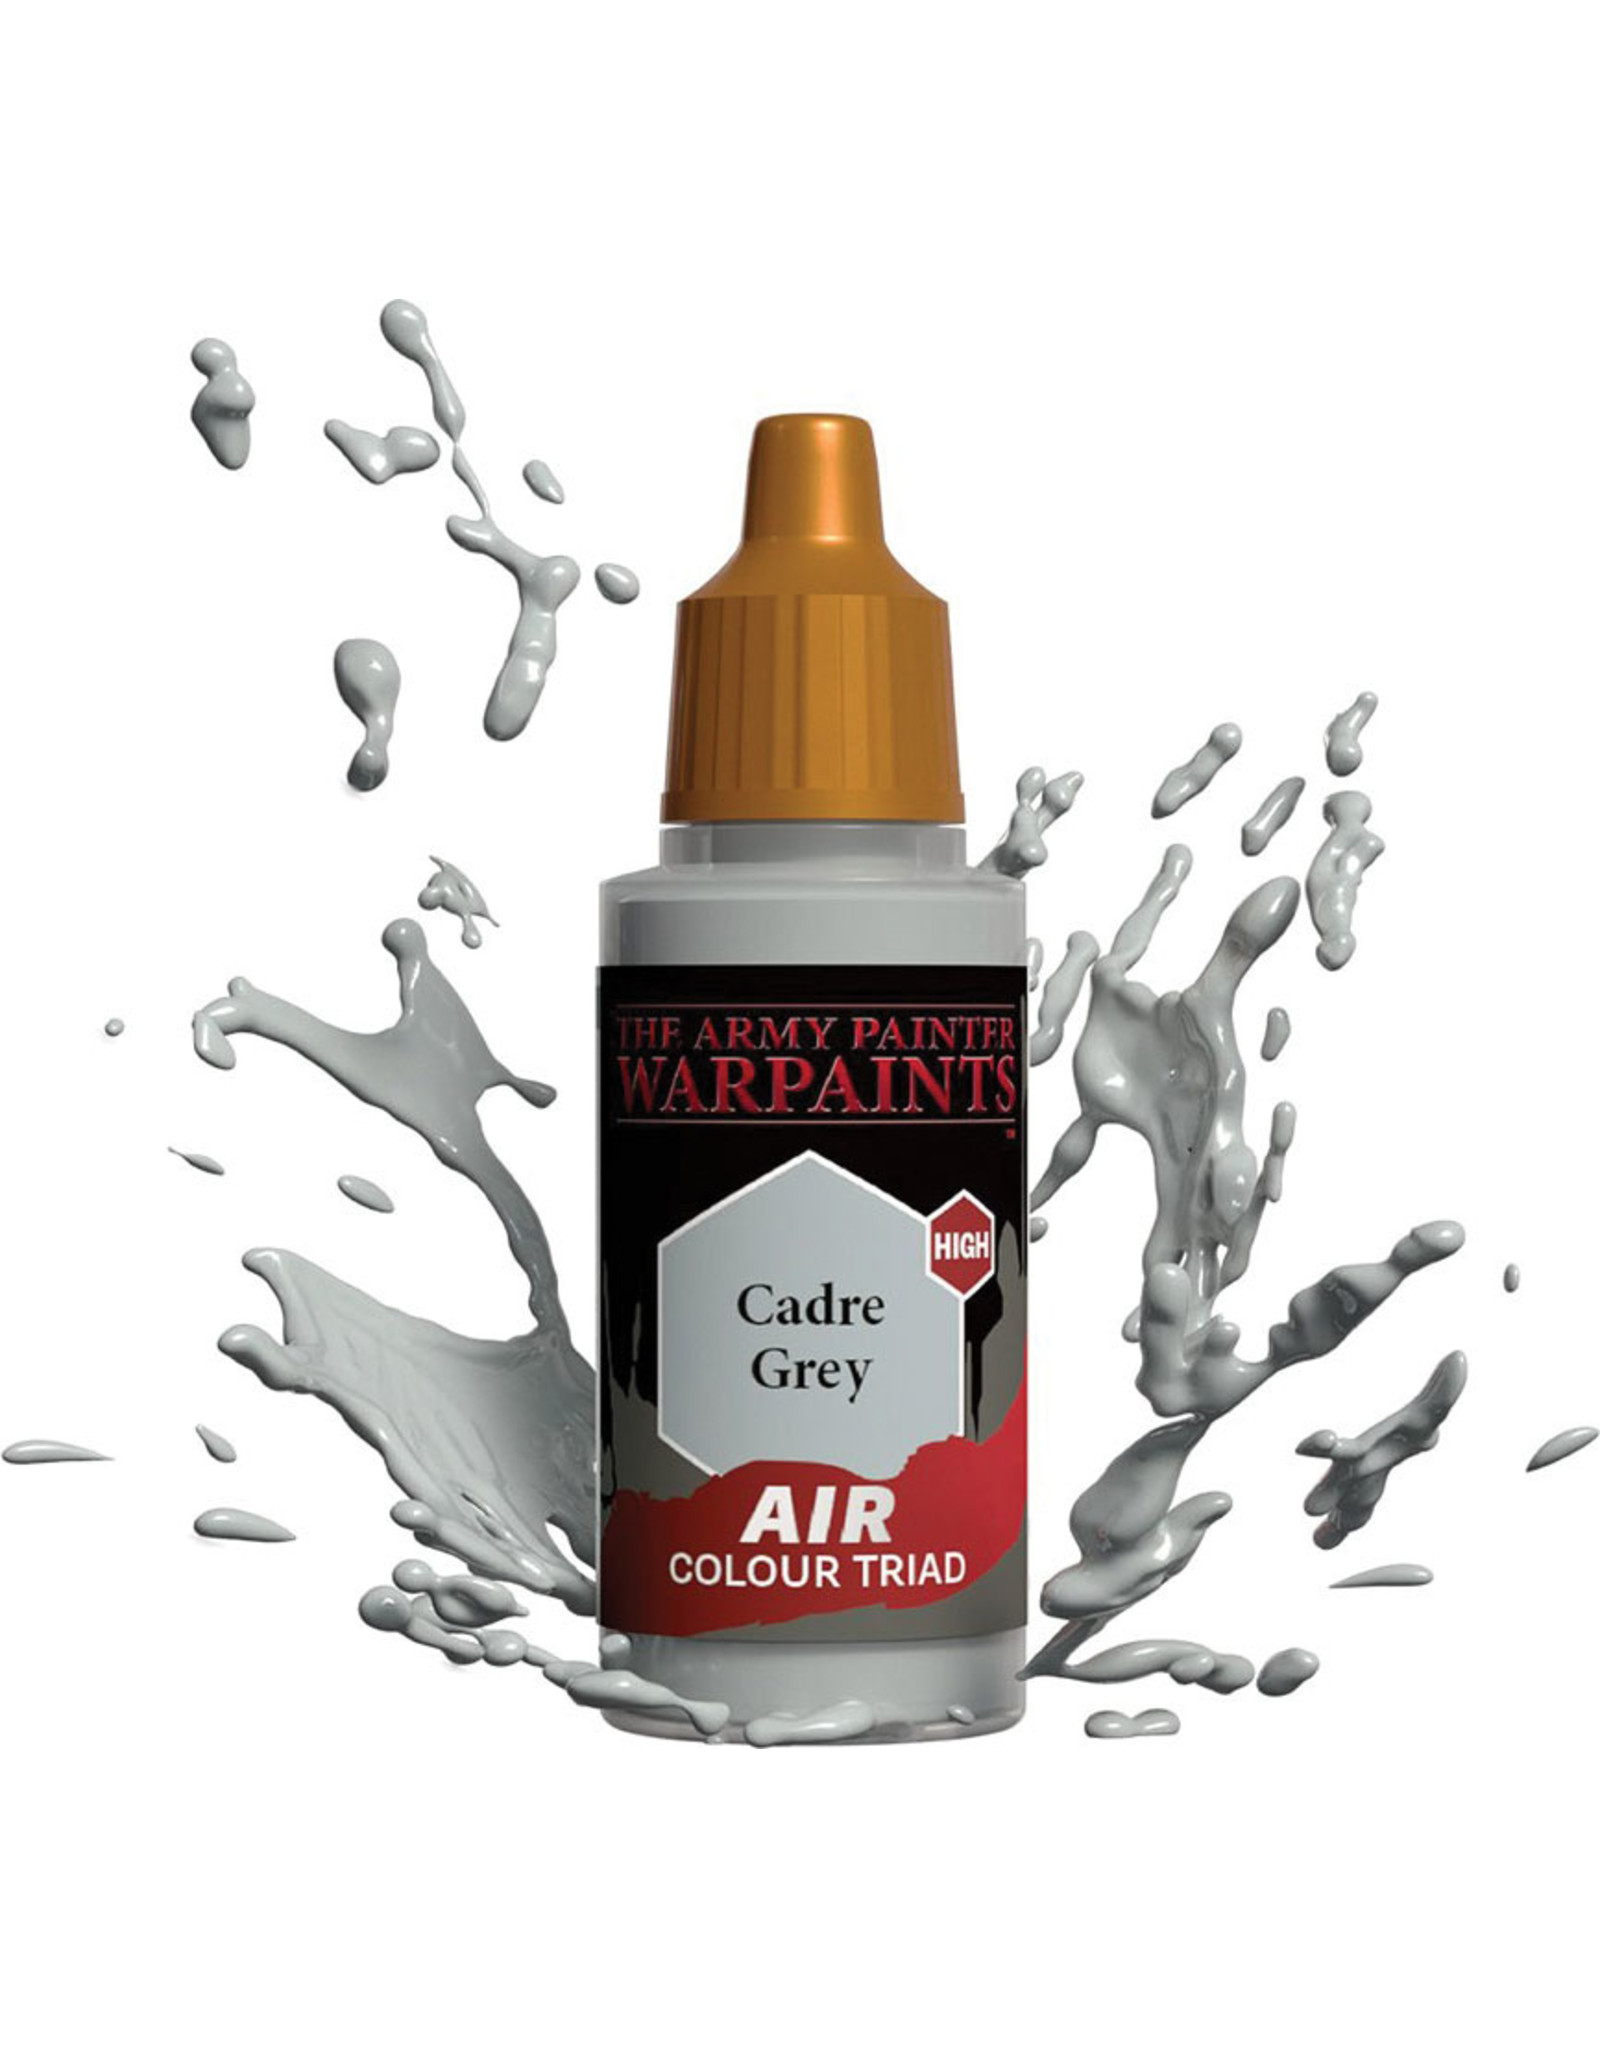 Army Painter Warpaint Air: Cadre Grey, 18ml.